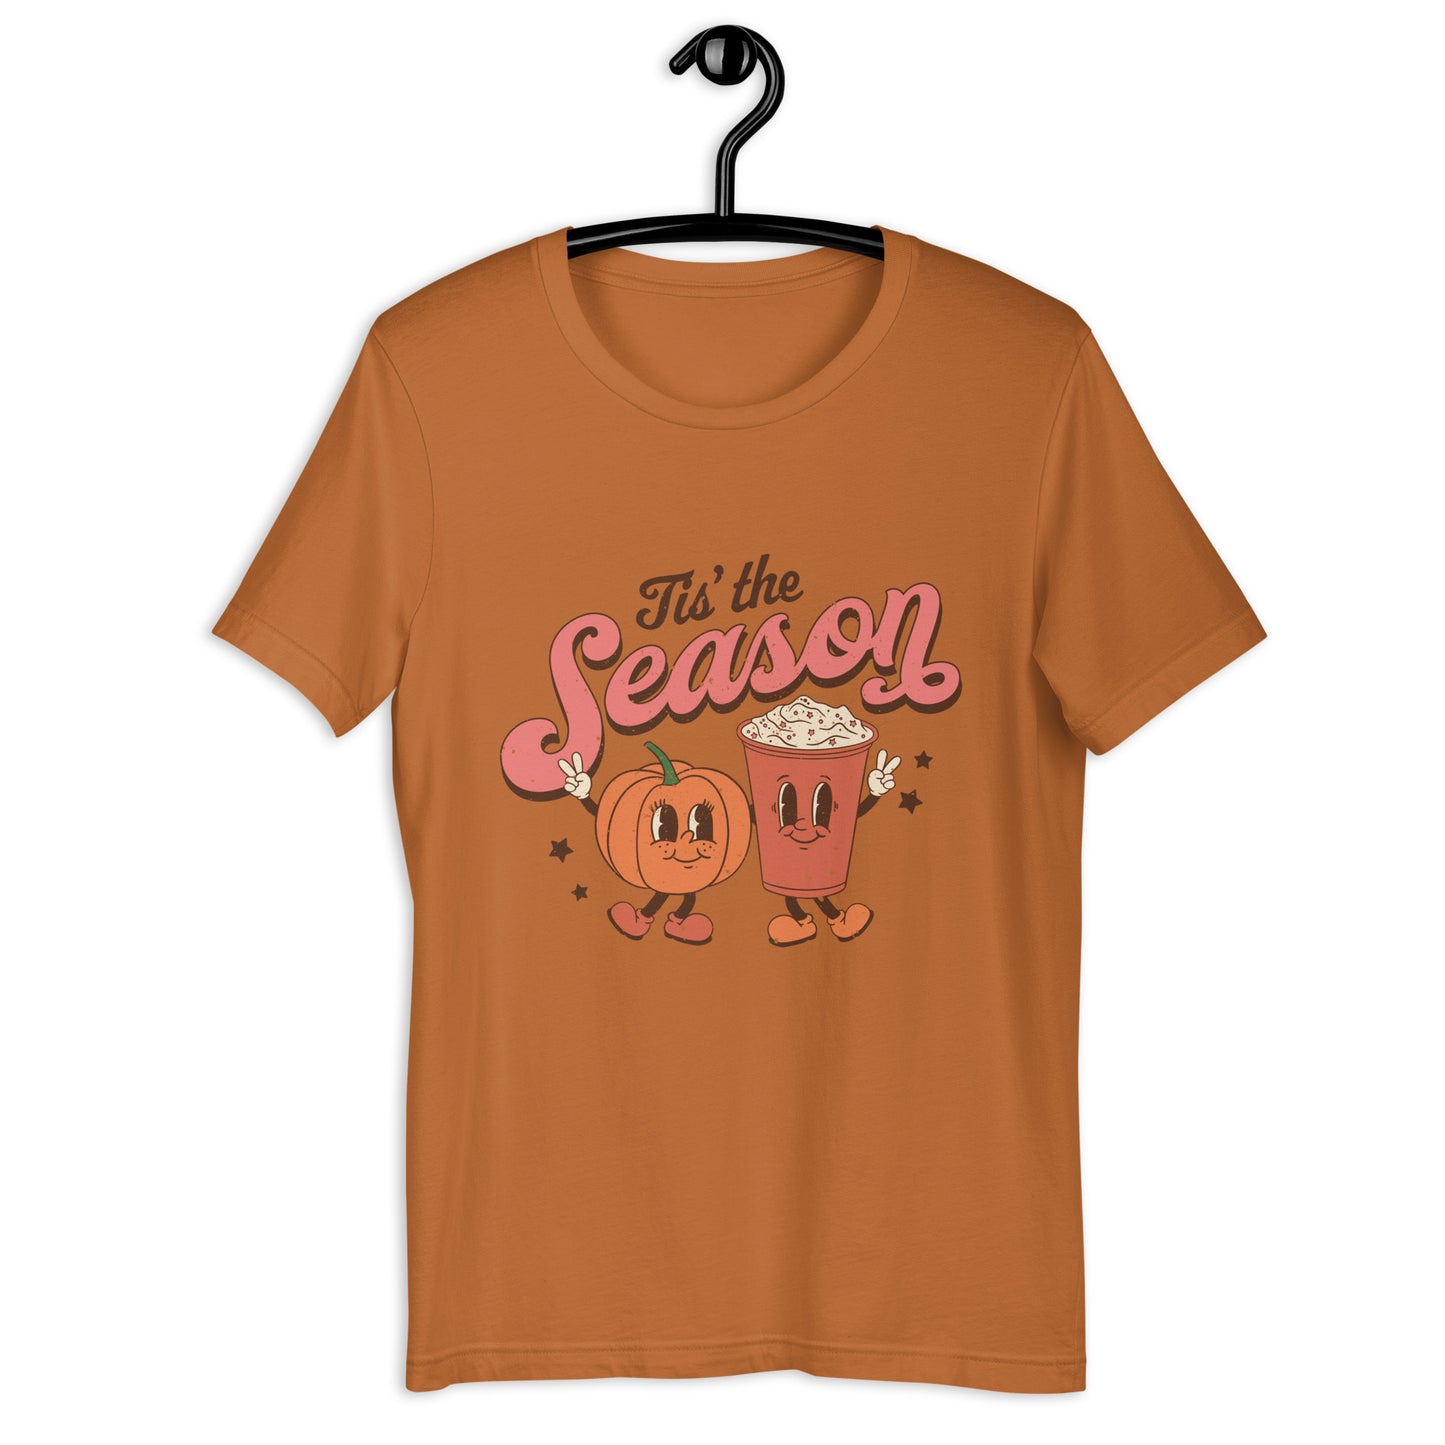 Tis The Season t-shirt - multiple color options